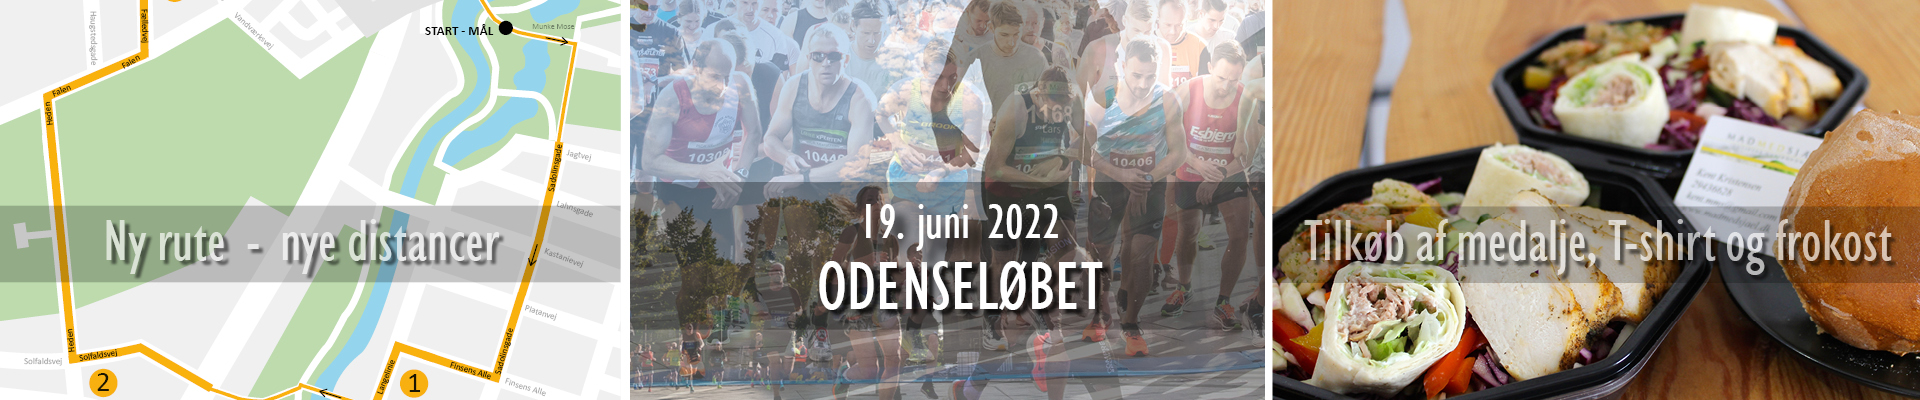 Odenseløbet 2022